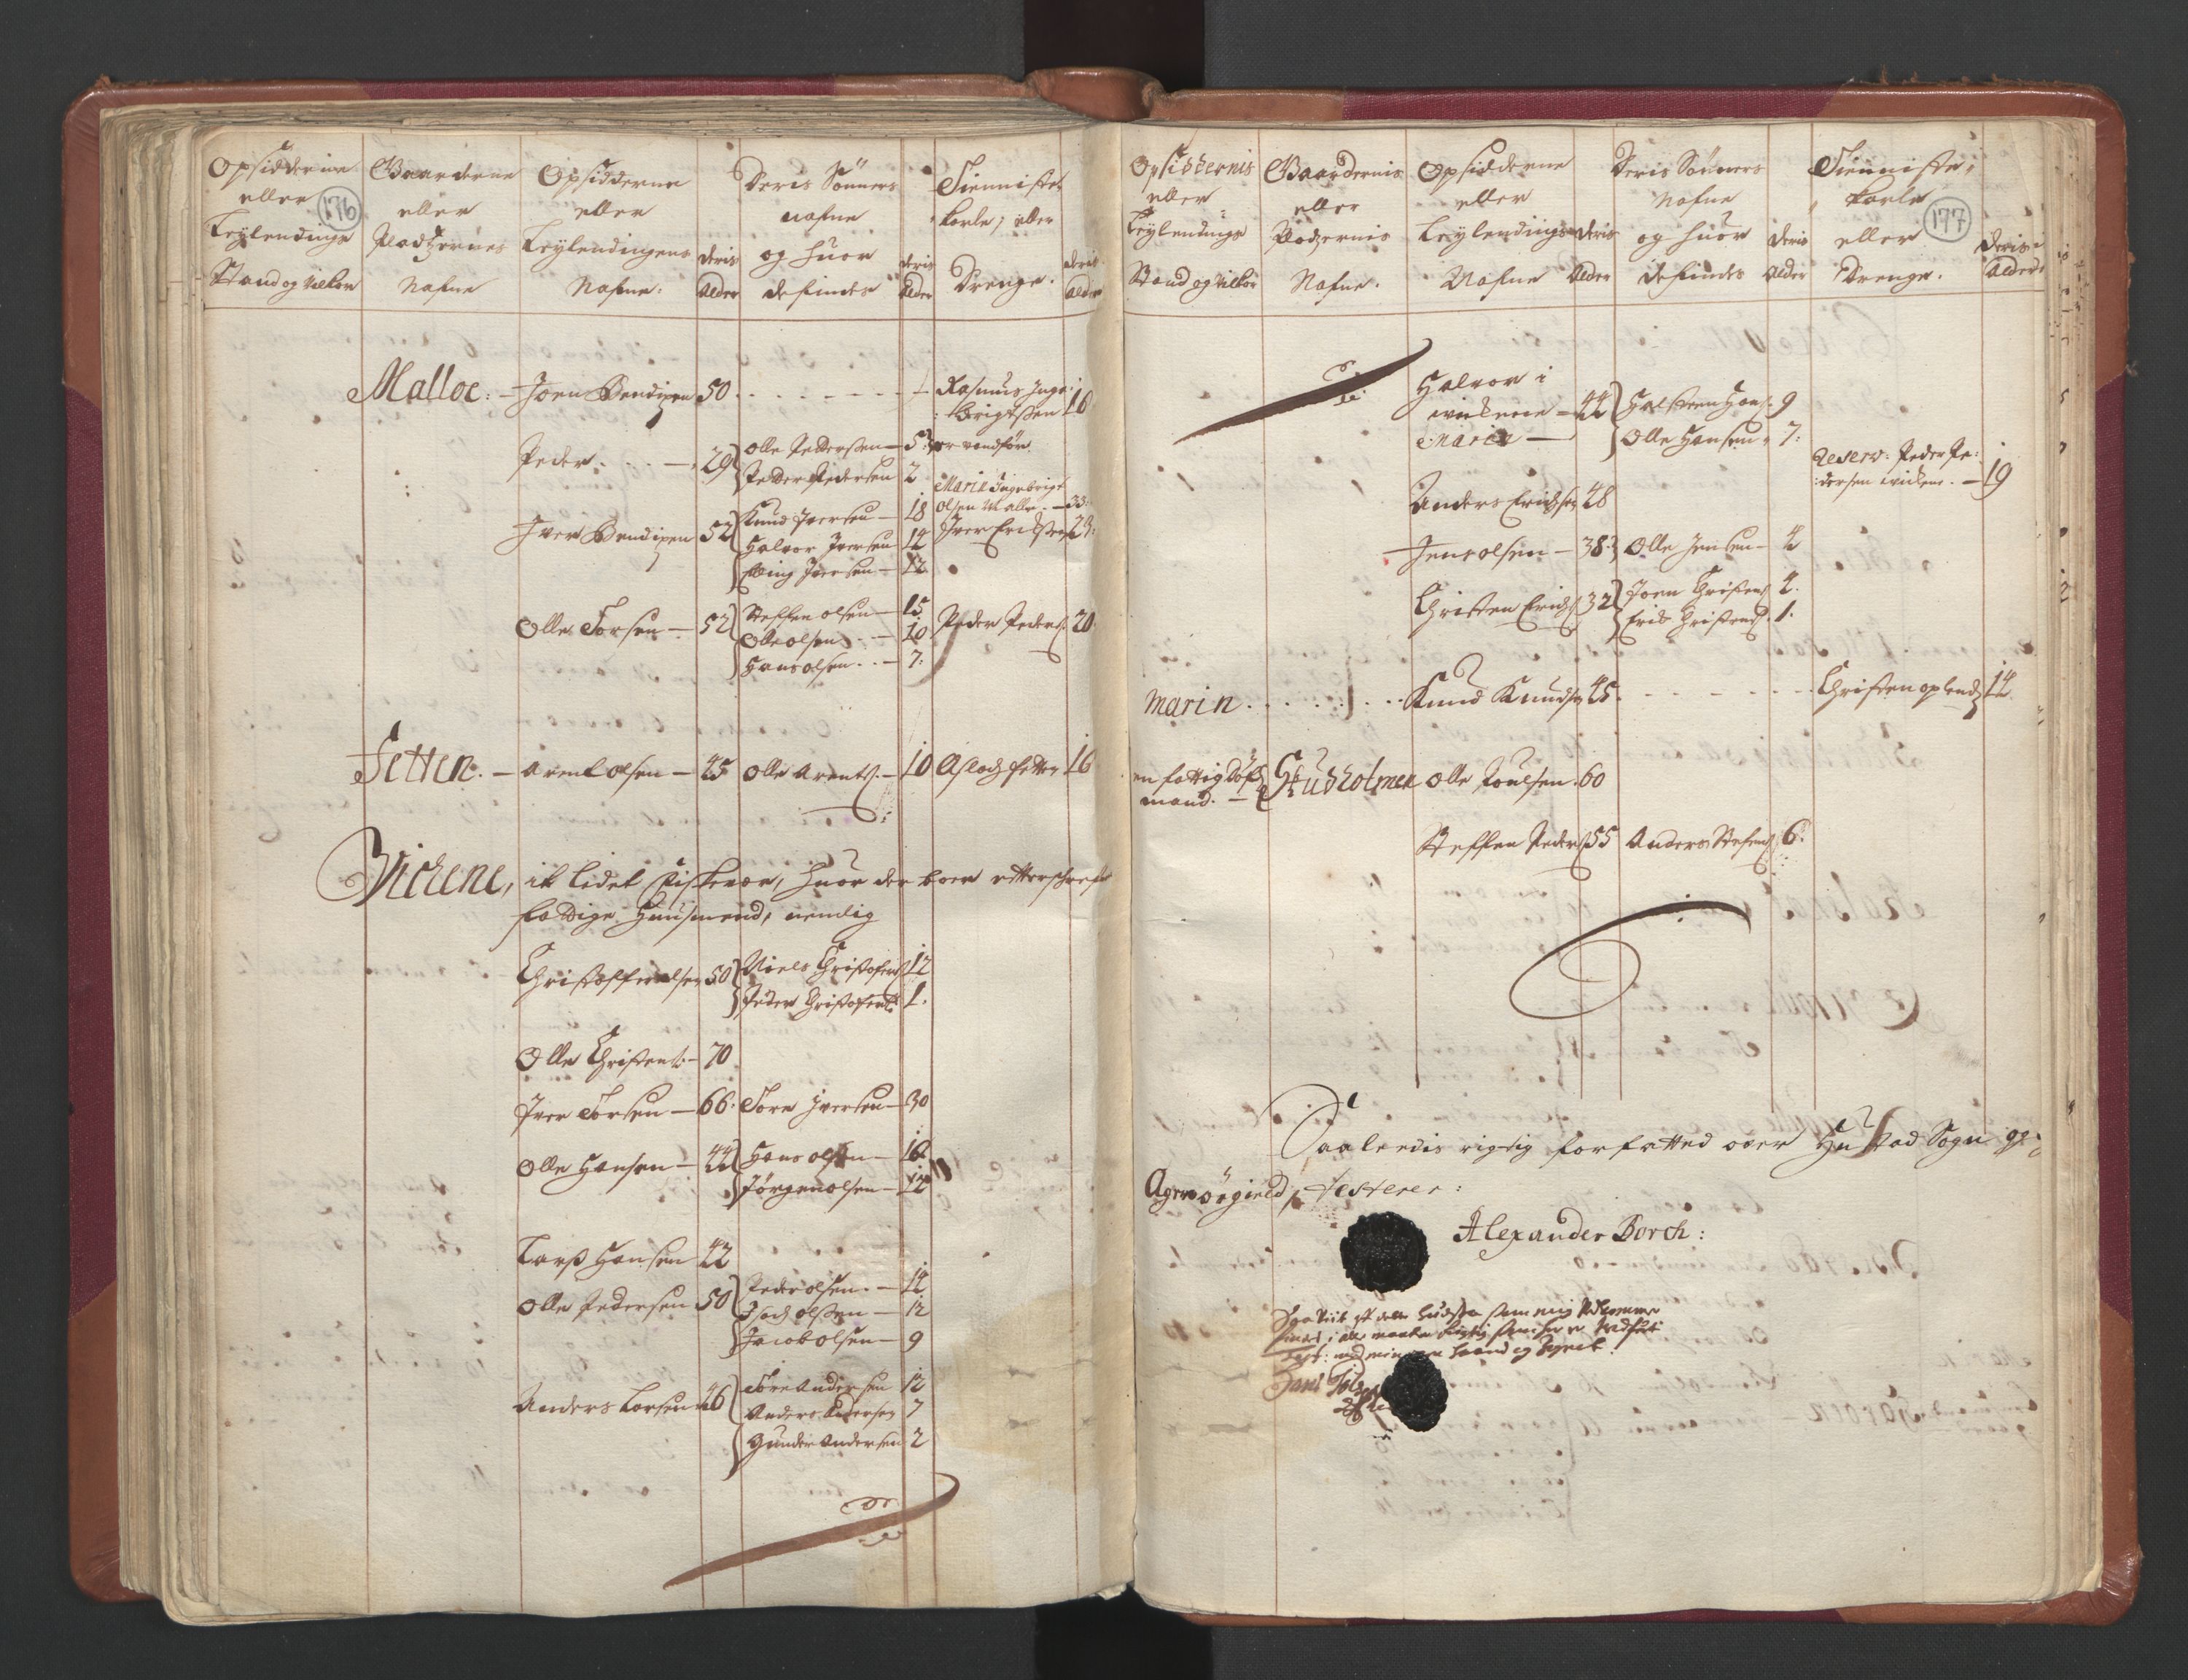 RA, Manntallet 1701, nr. 11: Nordmøre fogderi og Romsdal fogderi, 1701, s. 176-177